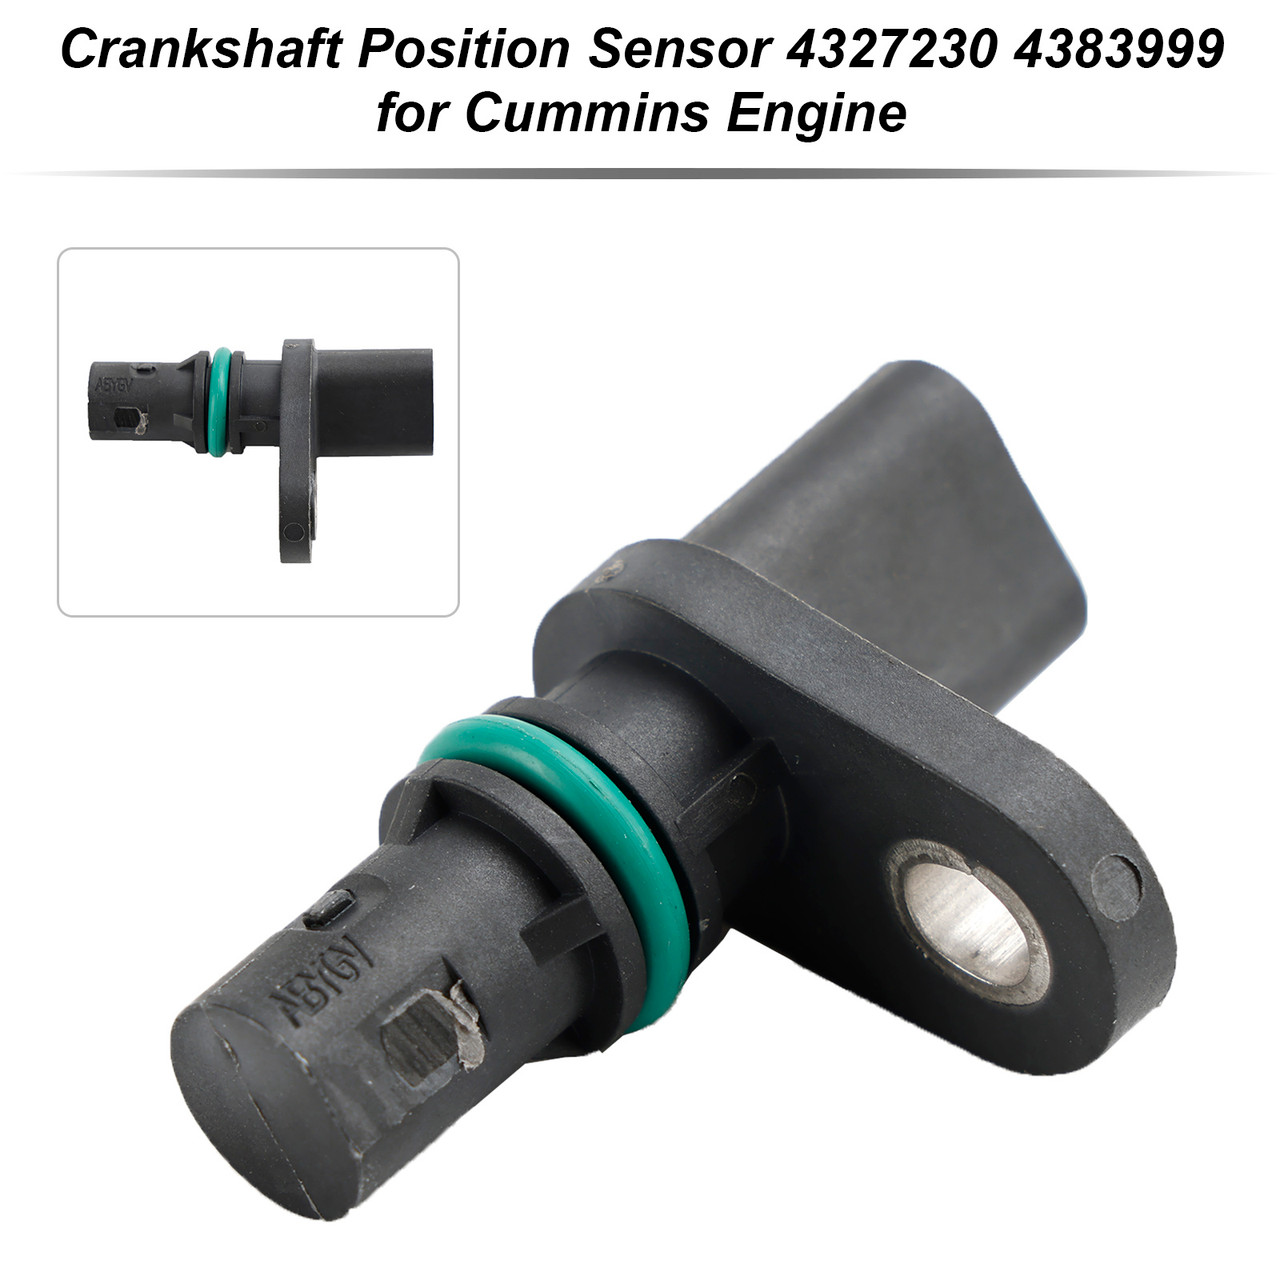 Crankshaft Position Sensor 4327230 4383999 for Cummins Engine